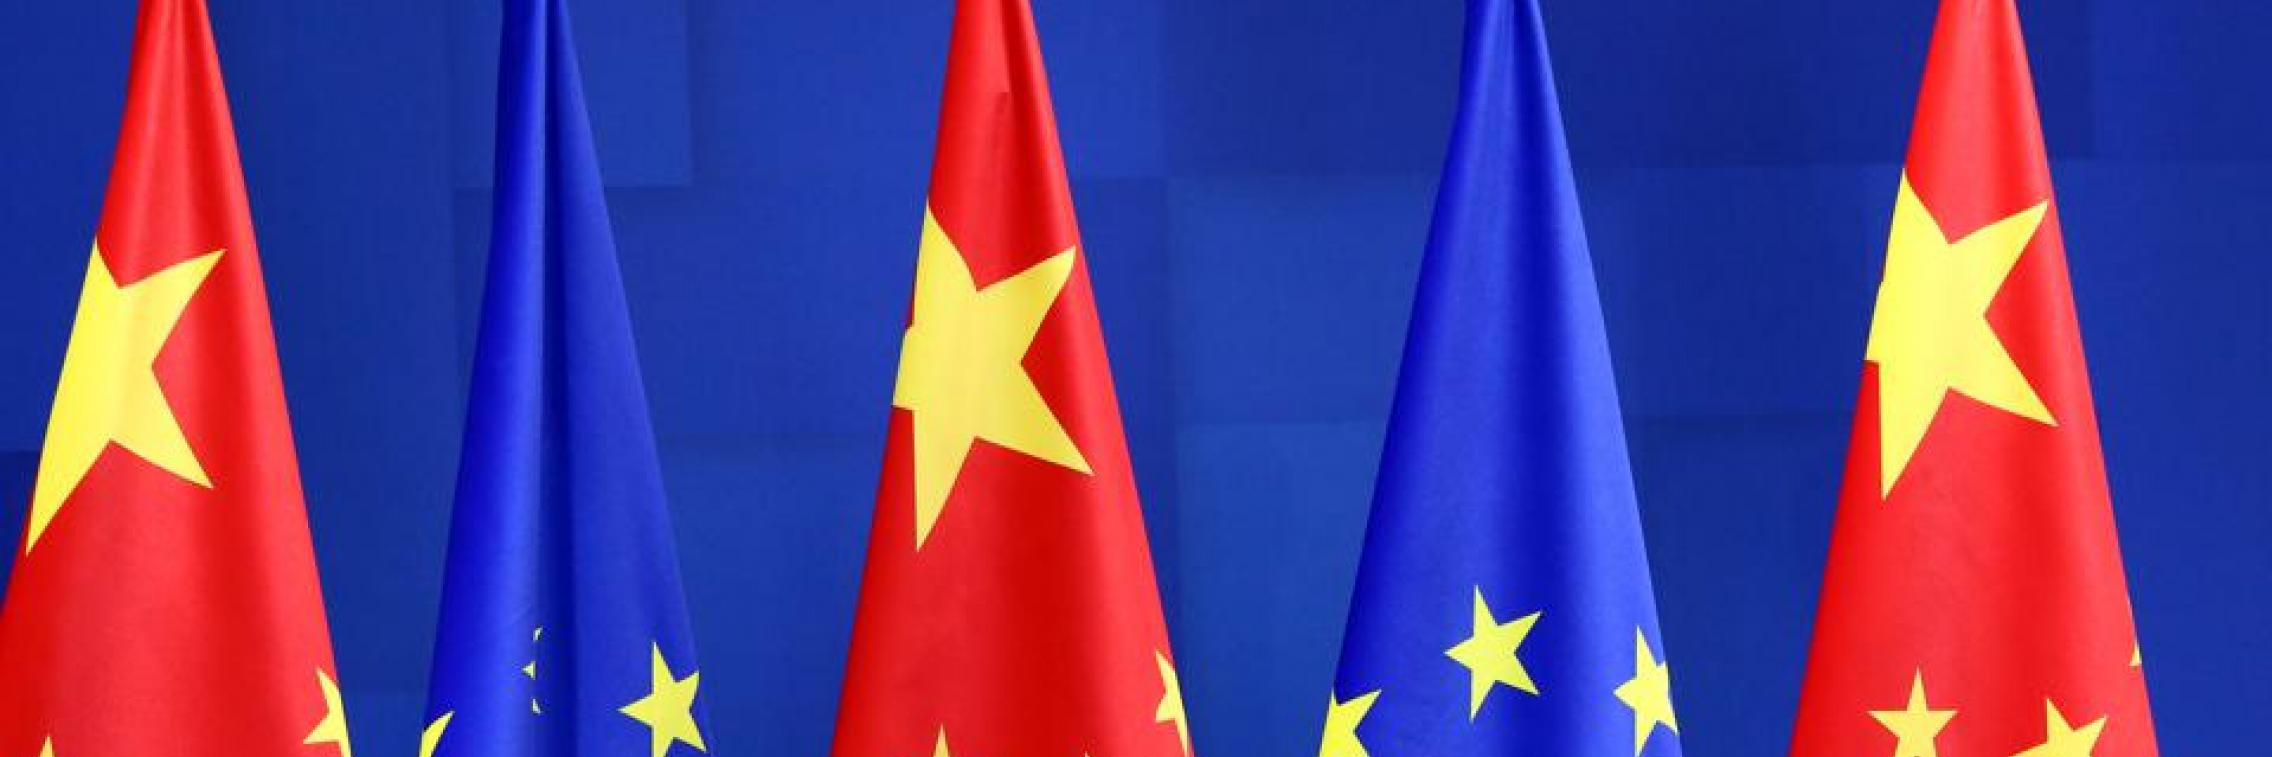 EU-China Comprehensive Investment Agreement 